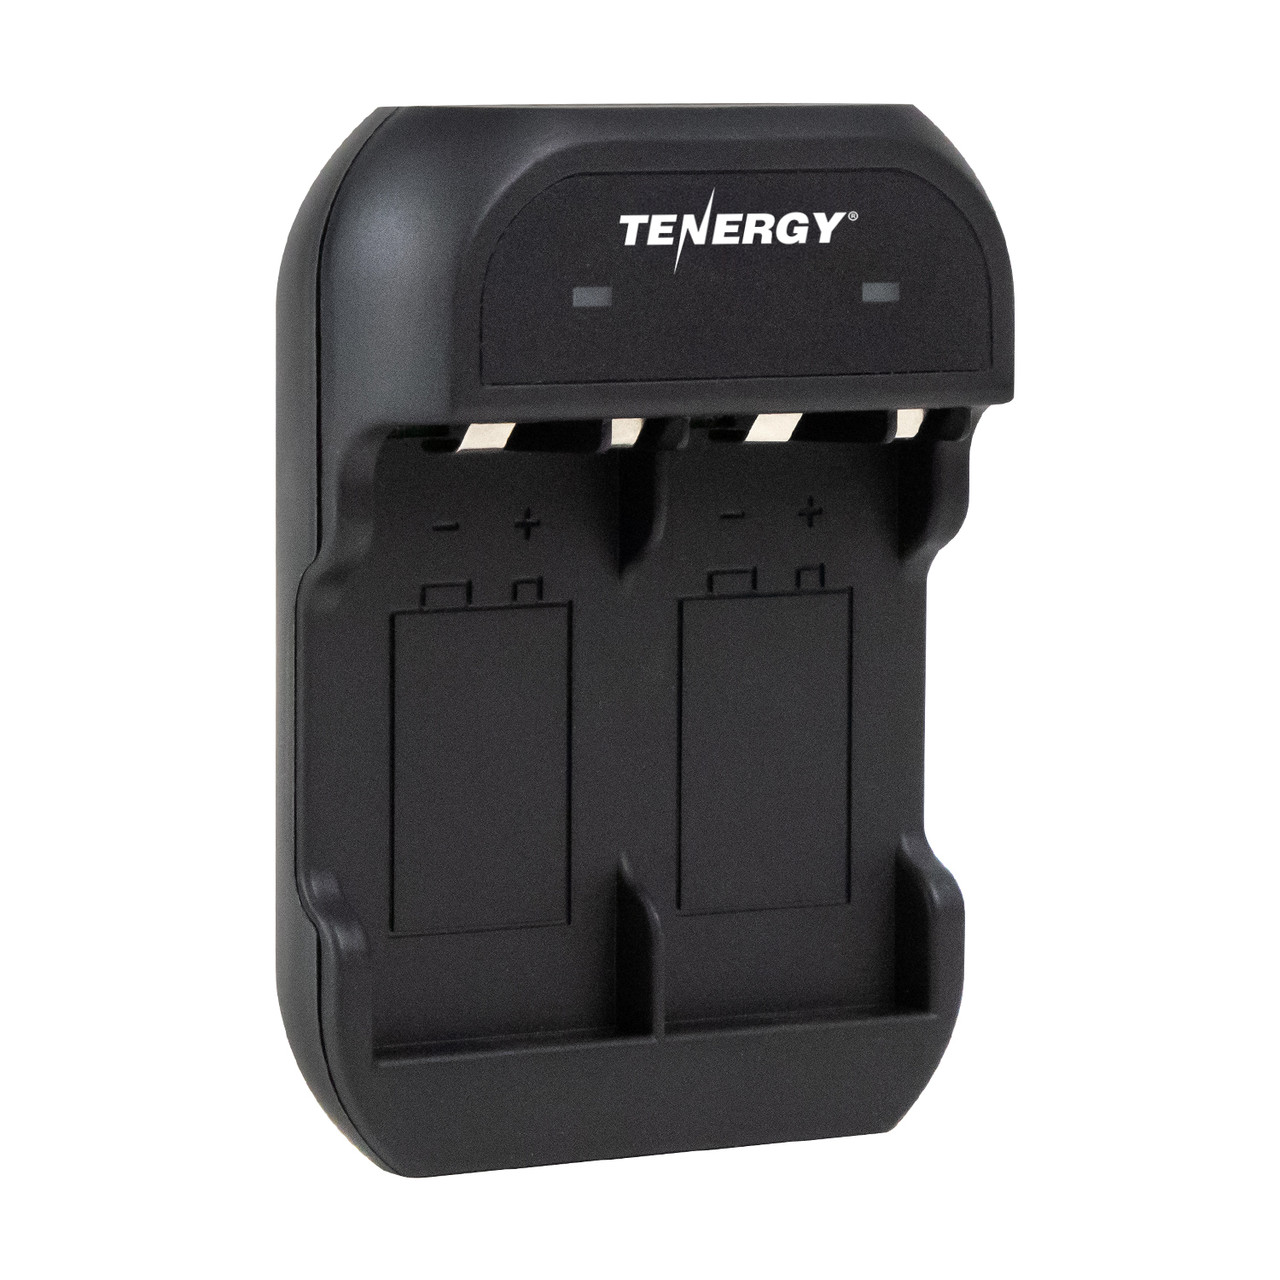 Tenergy TN141 Smart 2-Bay 9V NiMH Battery Charger